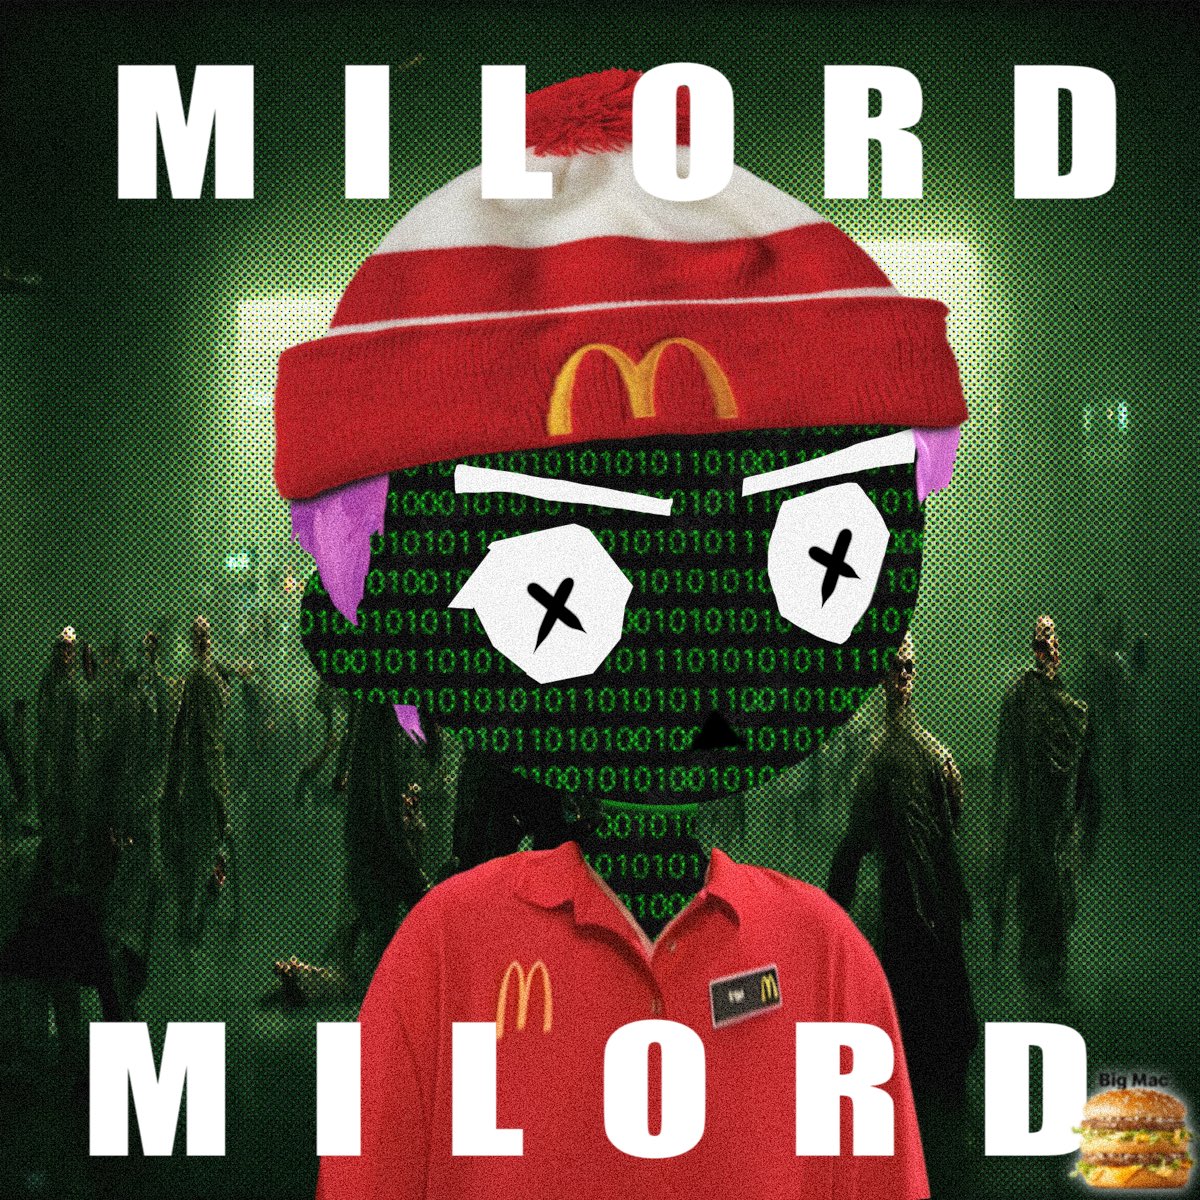 MILORD
MILORD
6M’s